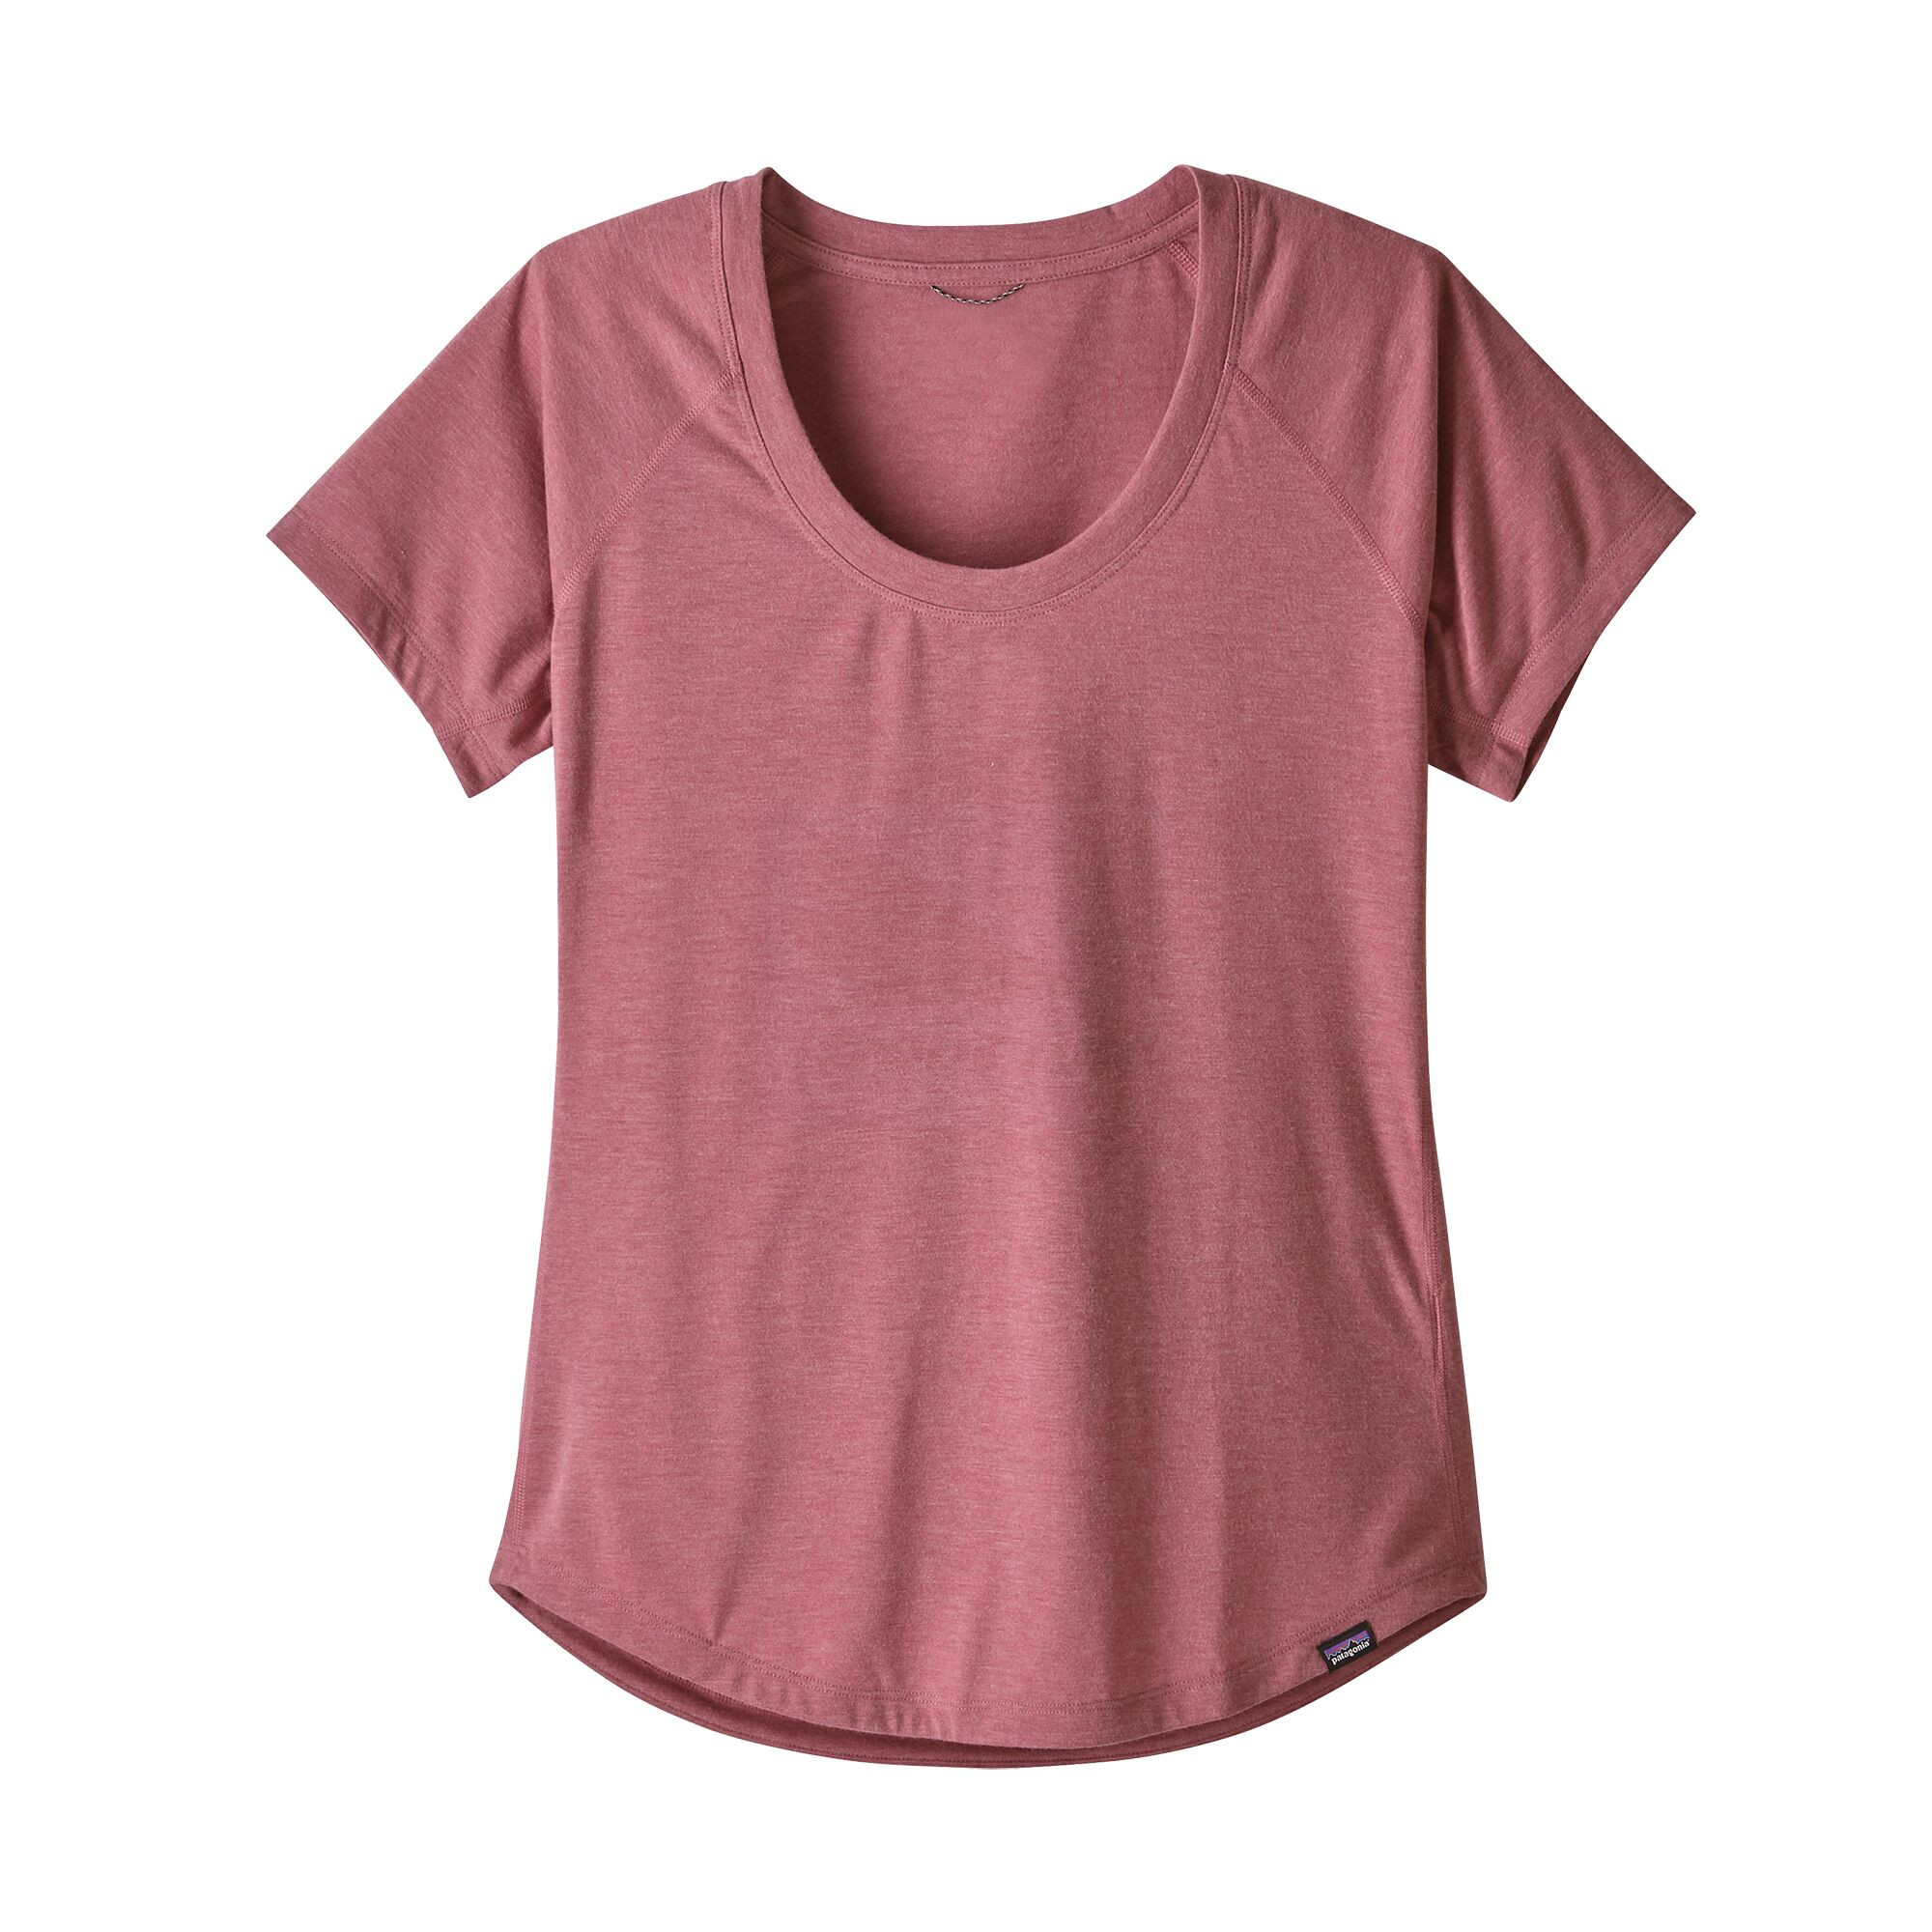 Fitness Hound artilleri Patagonia Women's Capilene® Cool Trail Shirt - Size M - Star Pink